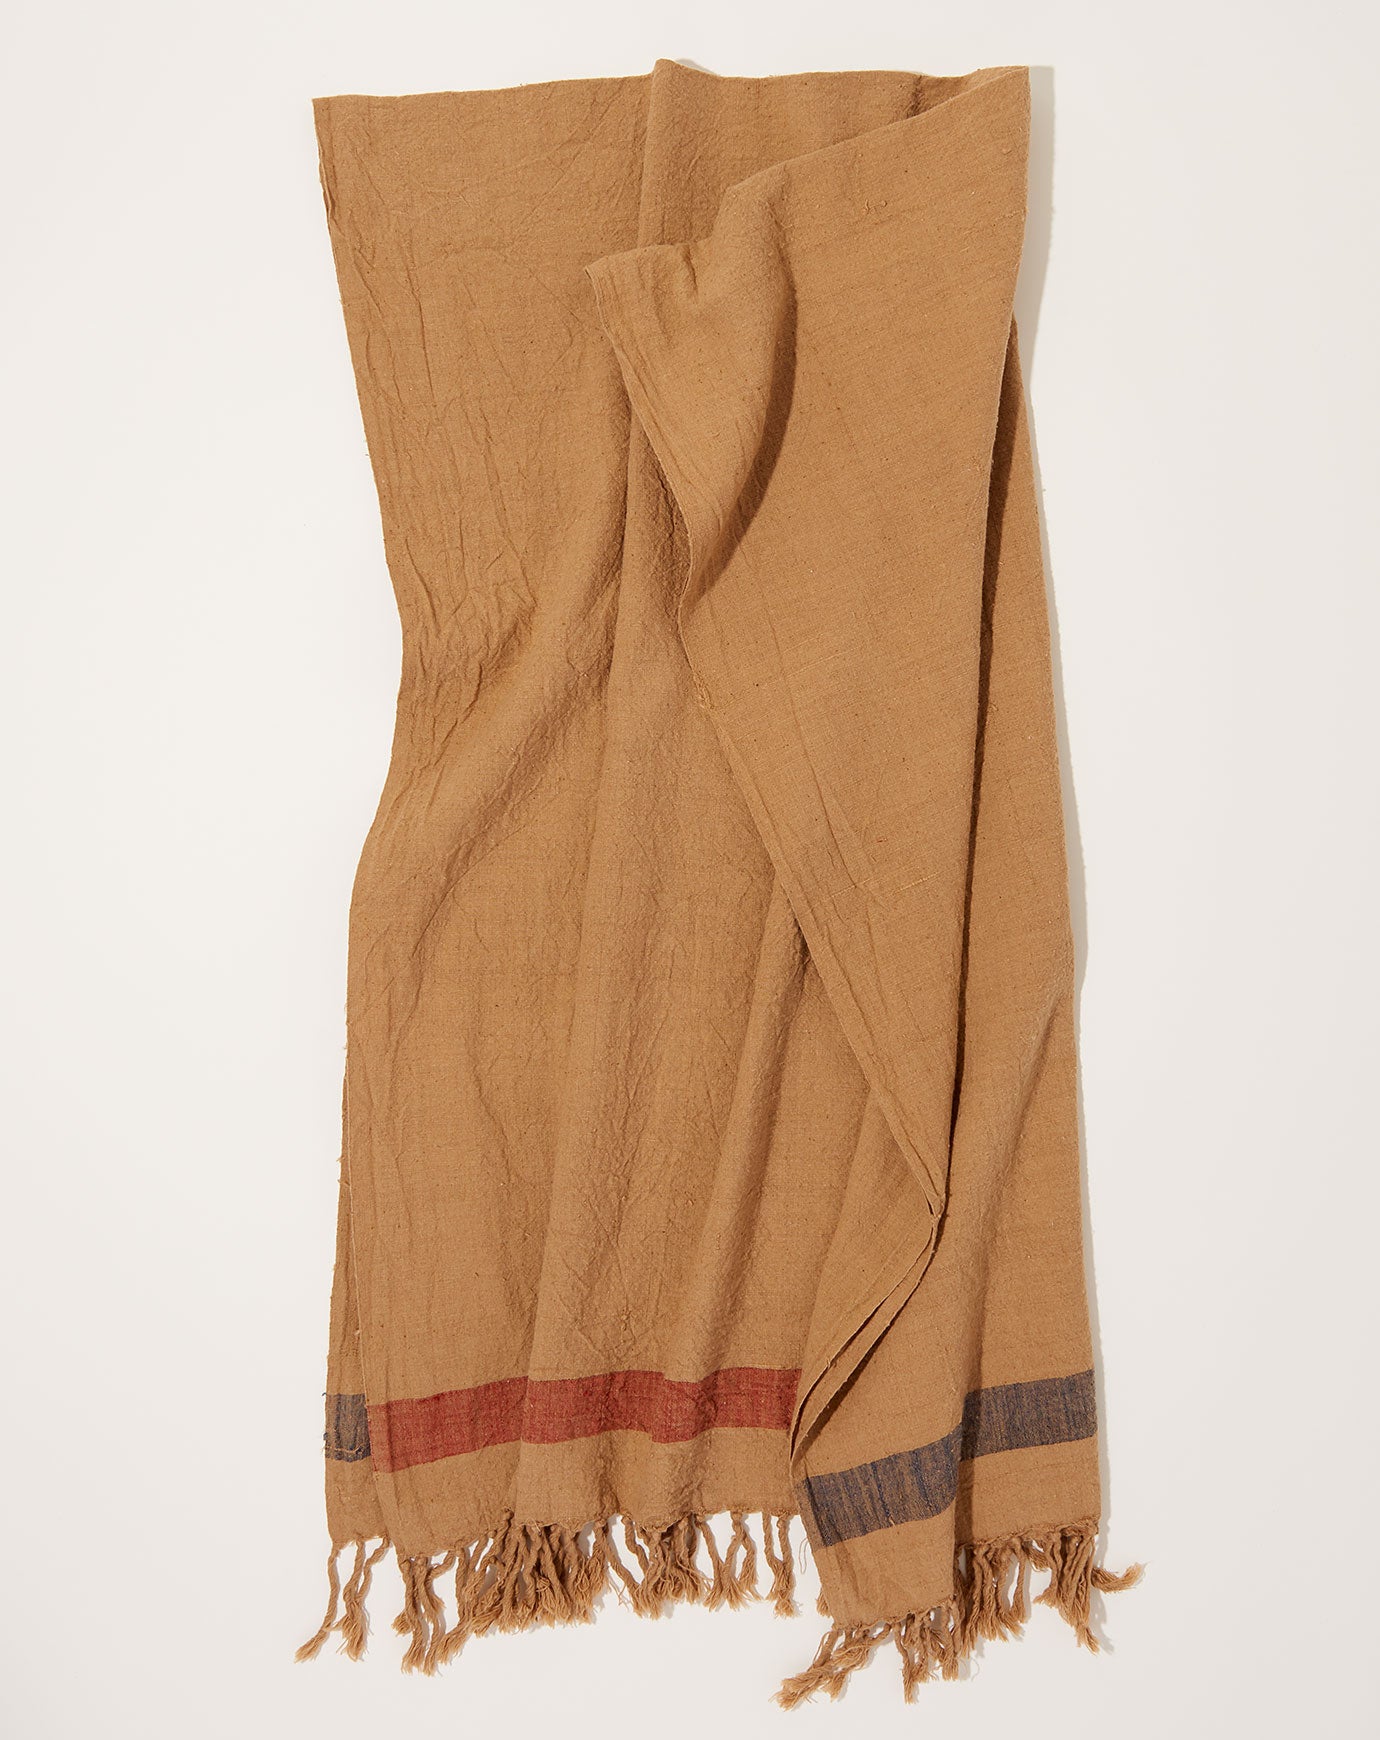 Auntie Oti Cotton Towel in Brown